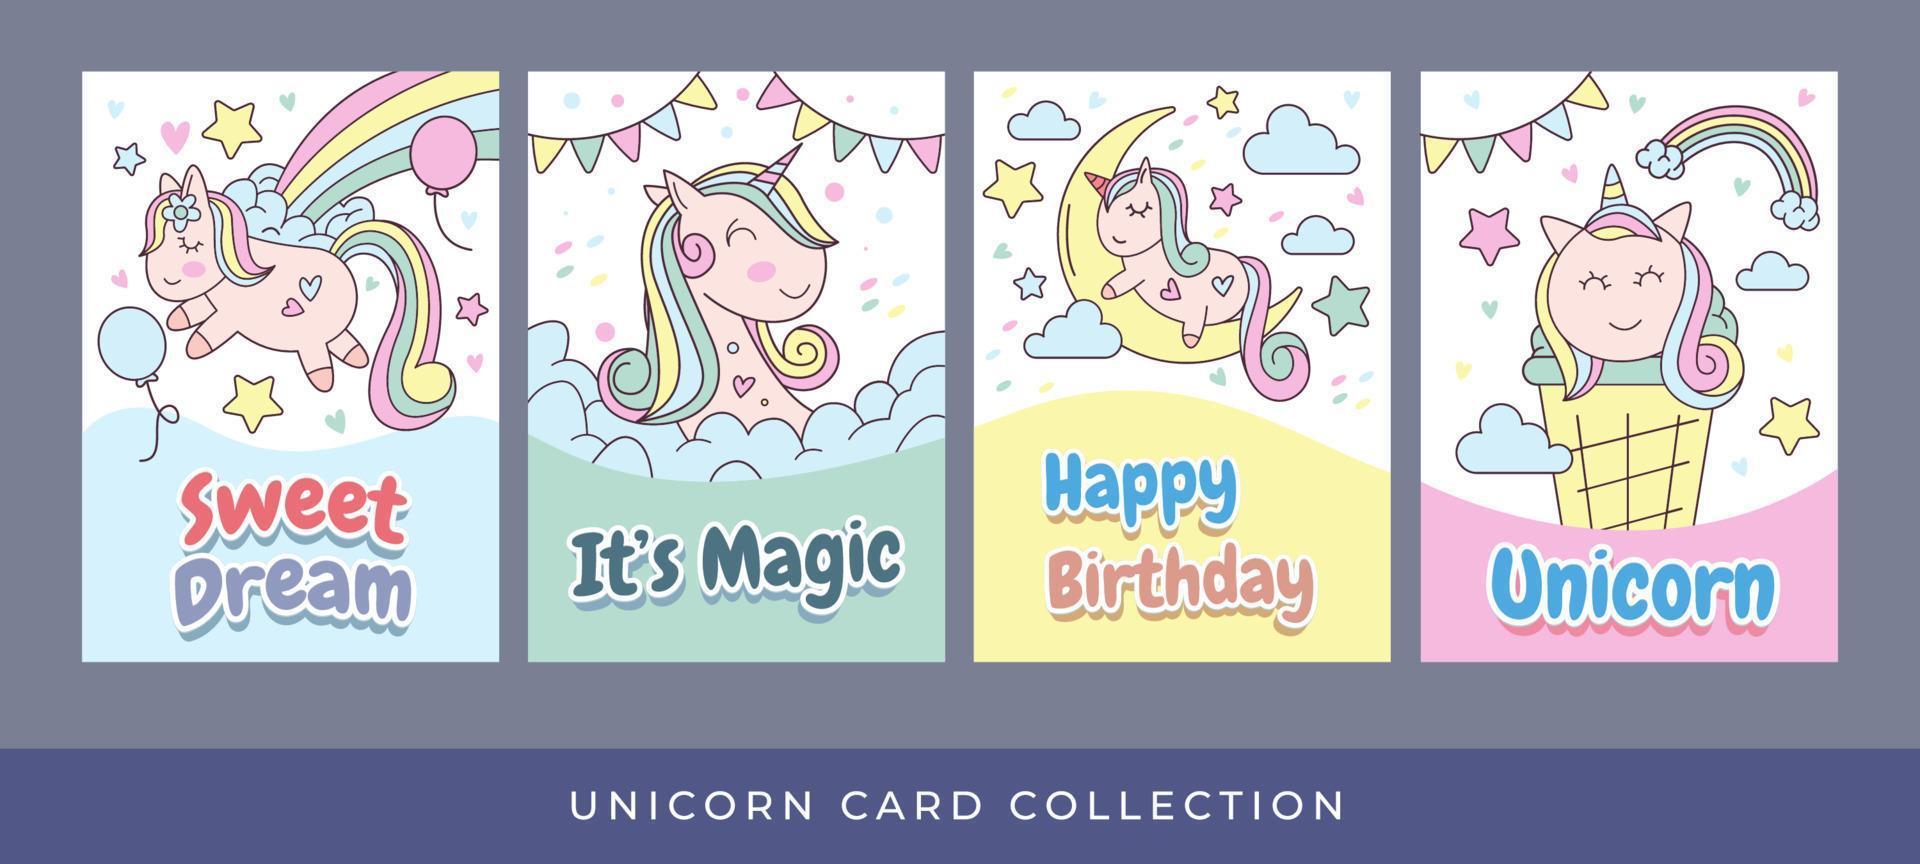 Unicorn Greeting Card Set vector